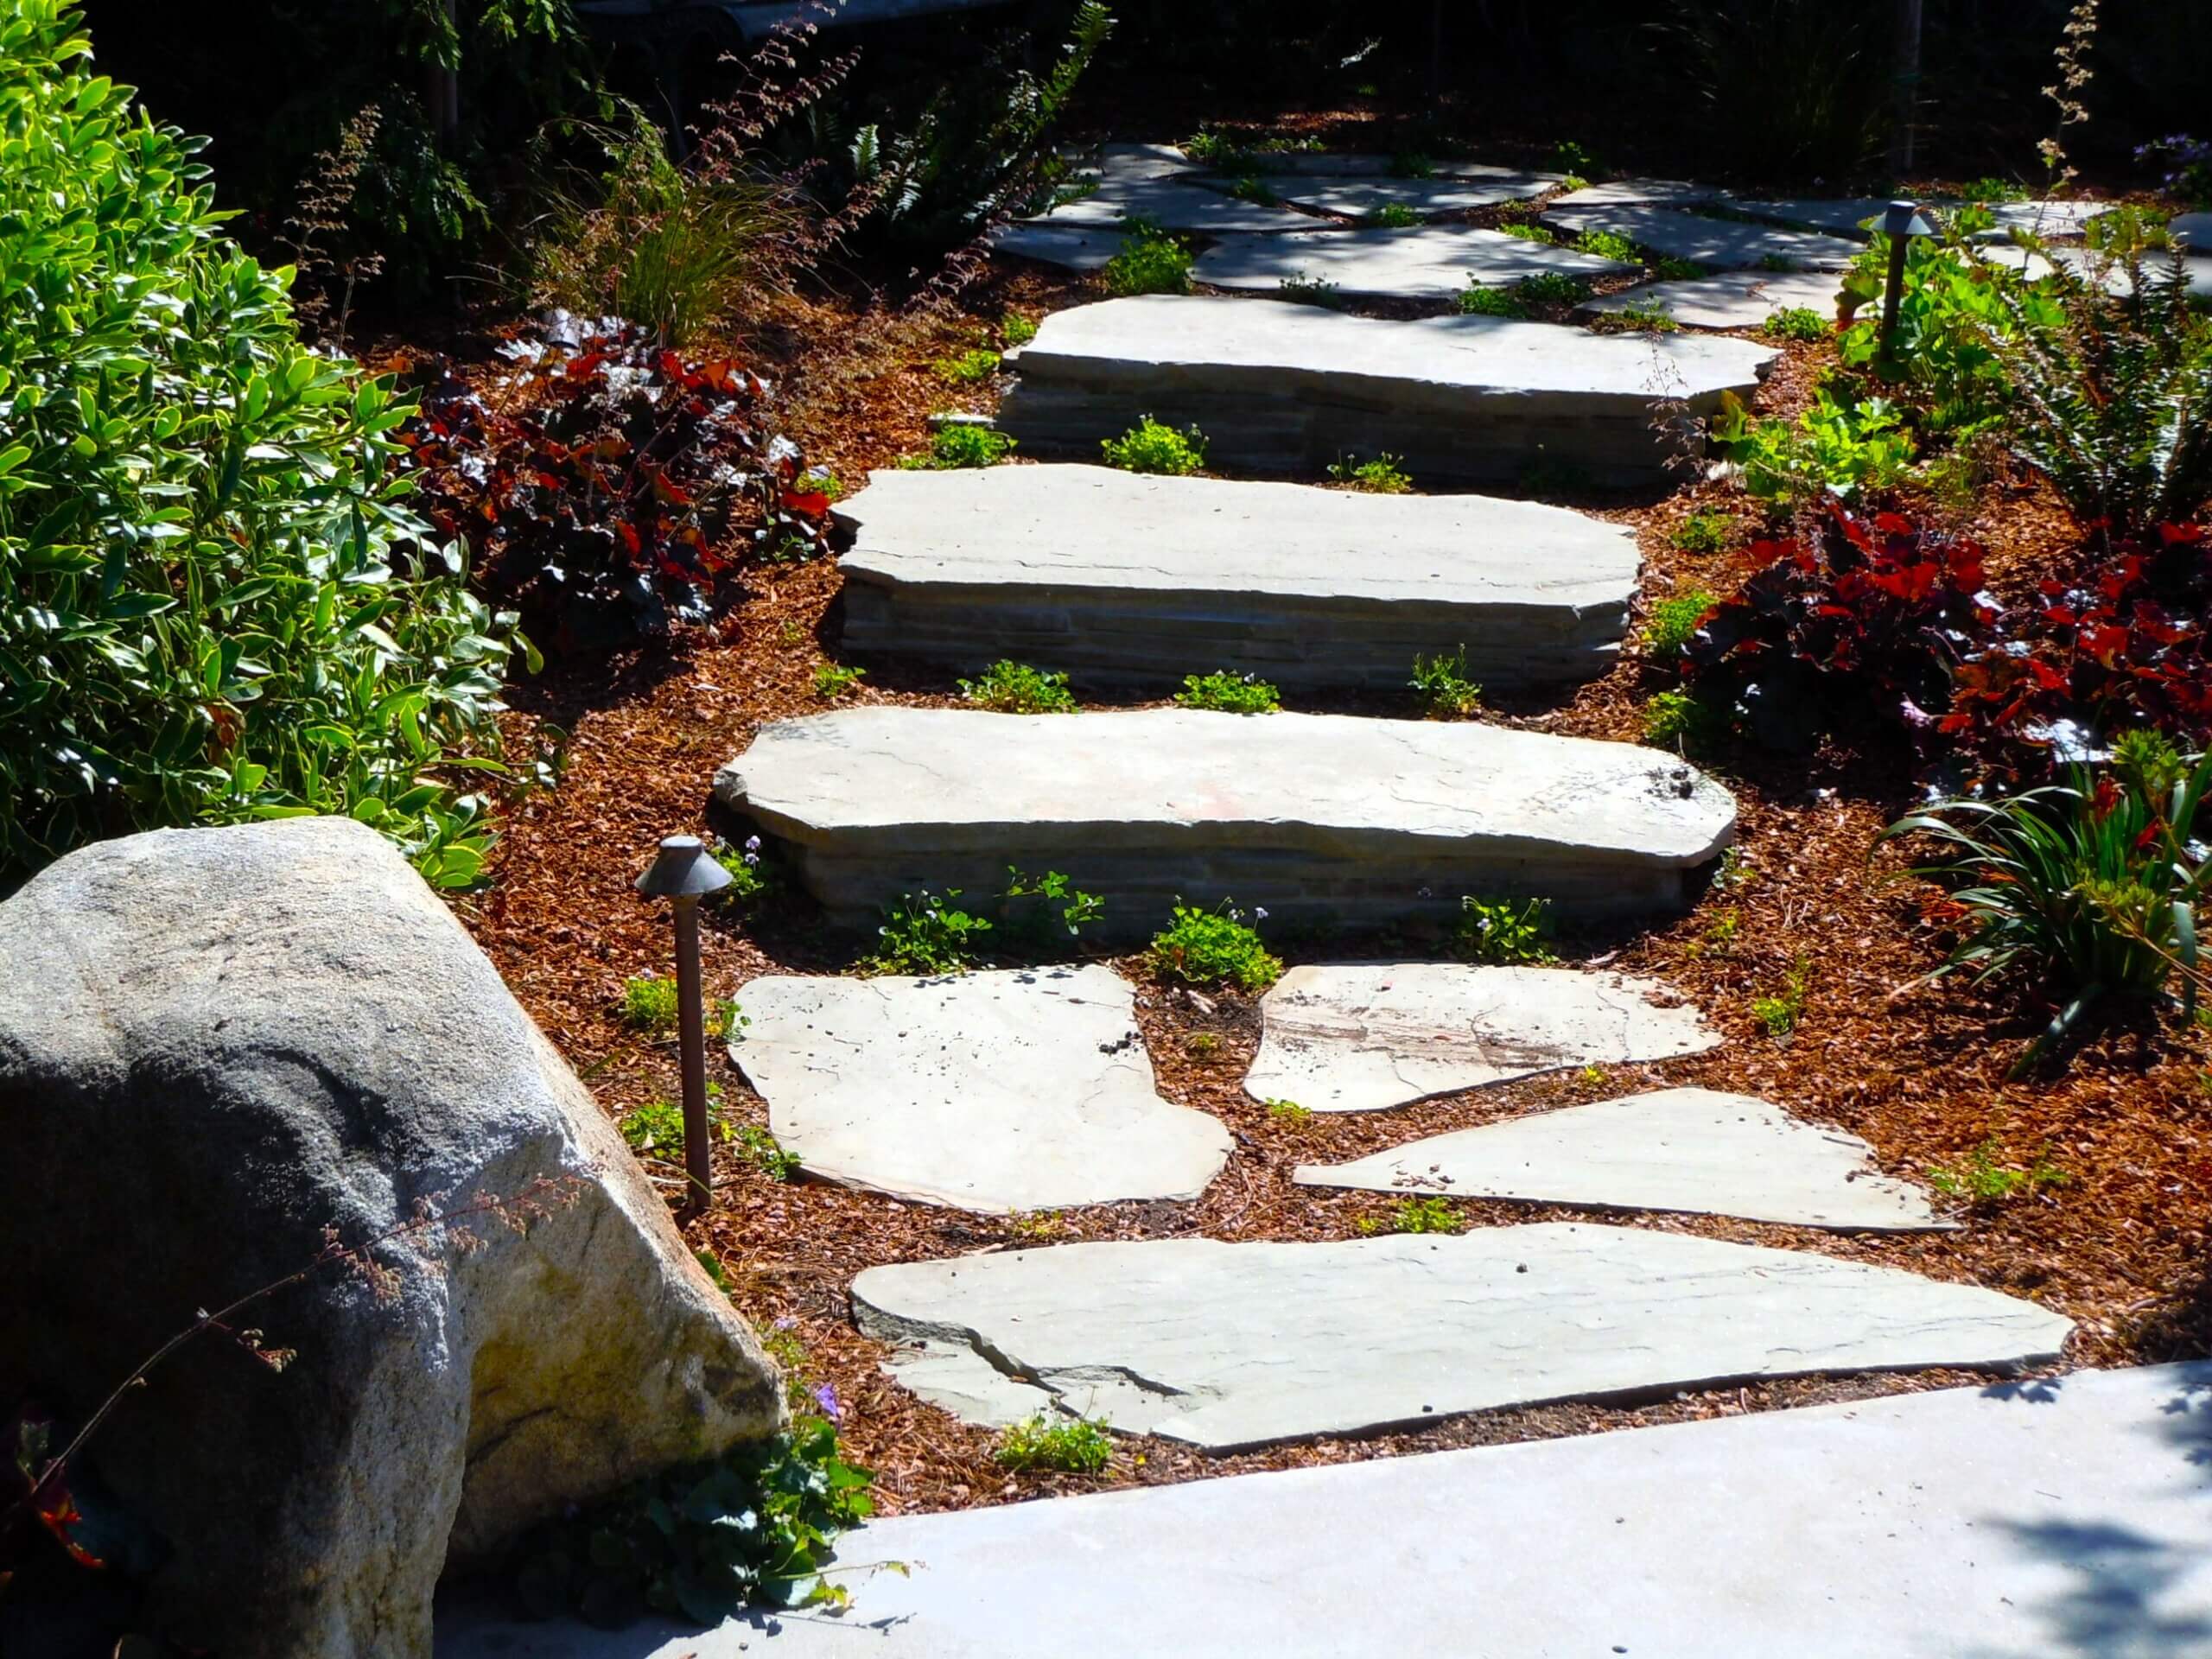 Natura stone pavers used as steps leading into shaded backyard area